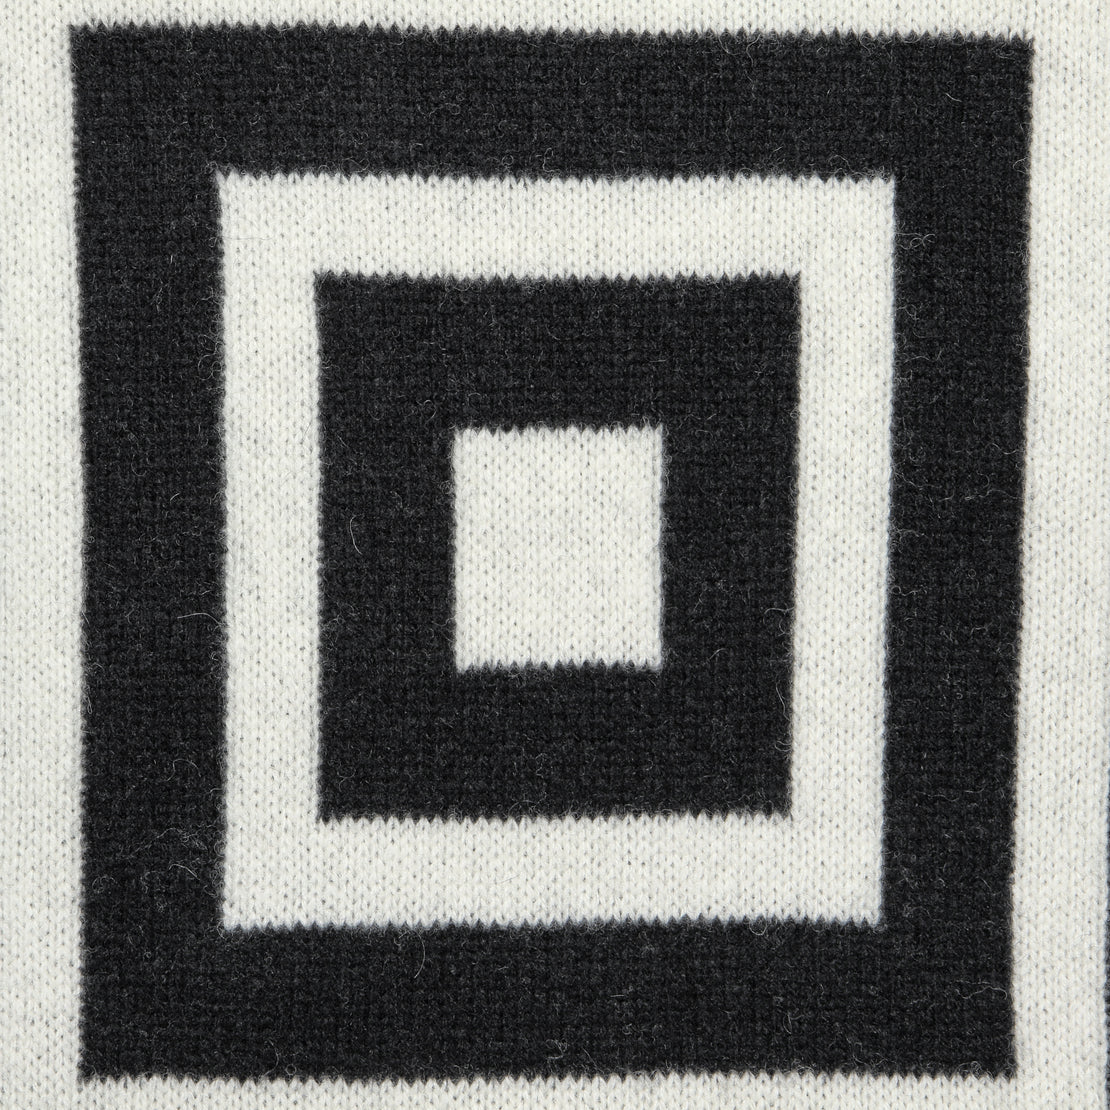 Concentric Squares Mock Neck Sweater - Black/White